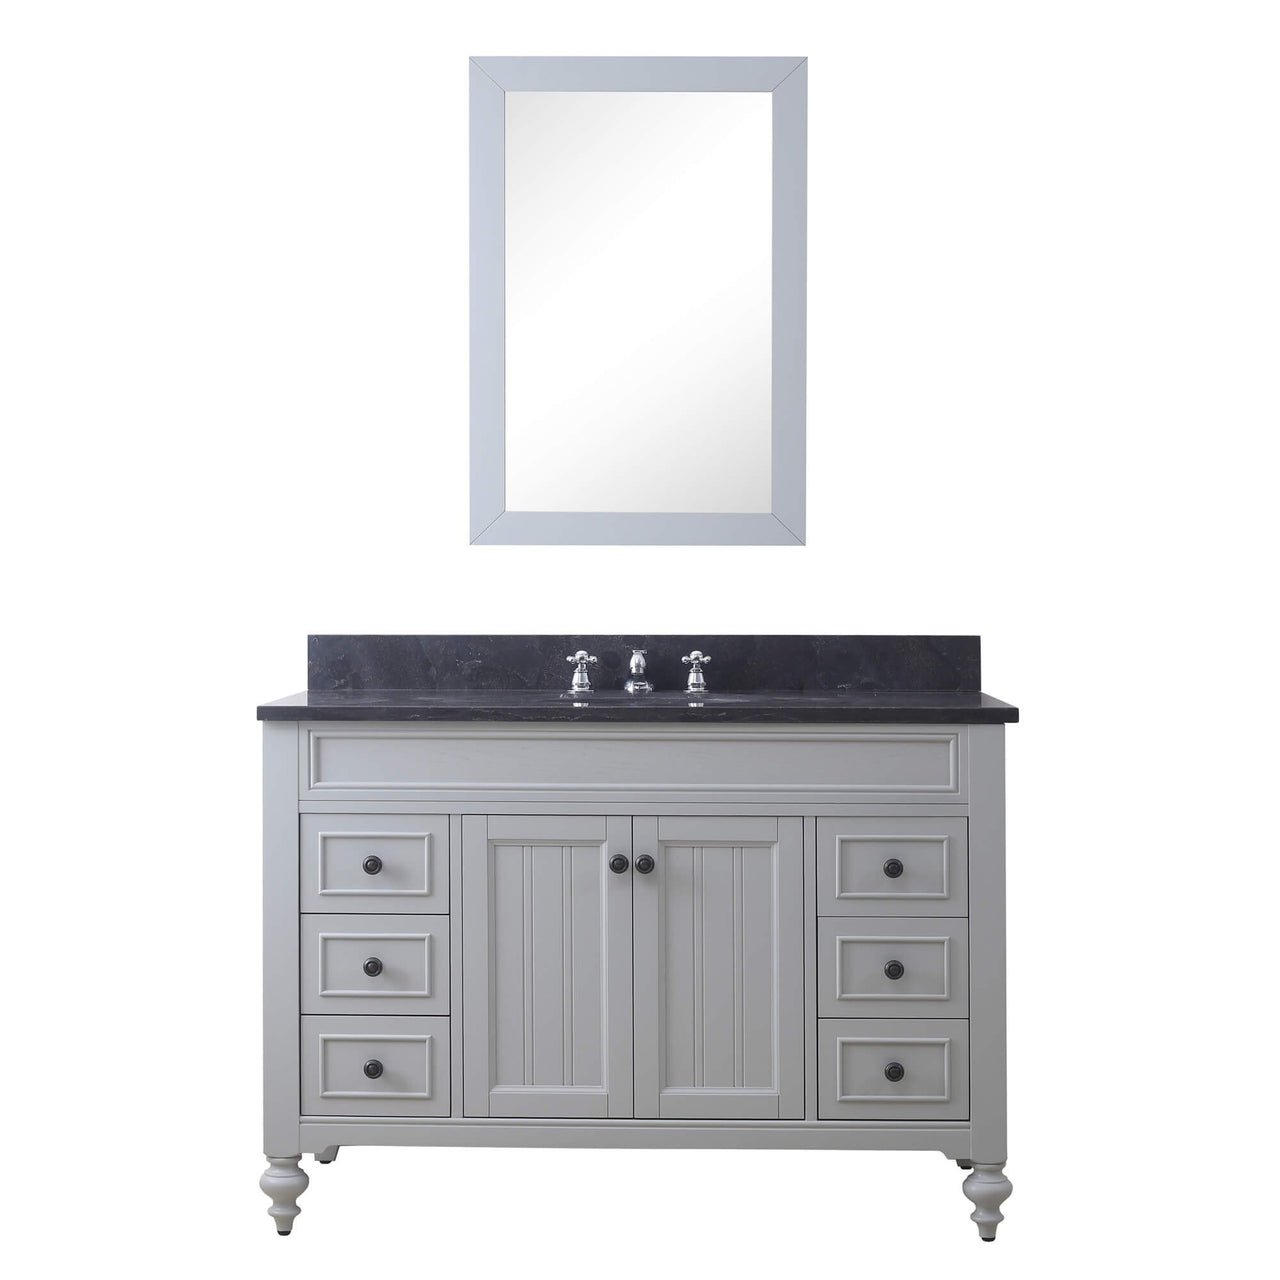 POTENZA 48" Earl Grey Single Sink Bathroom Vanity With Framed Mirror And Faucet Vanity Water Creation 